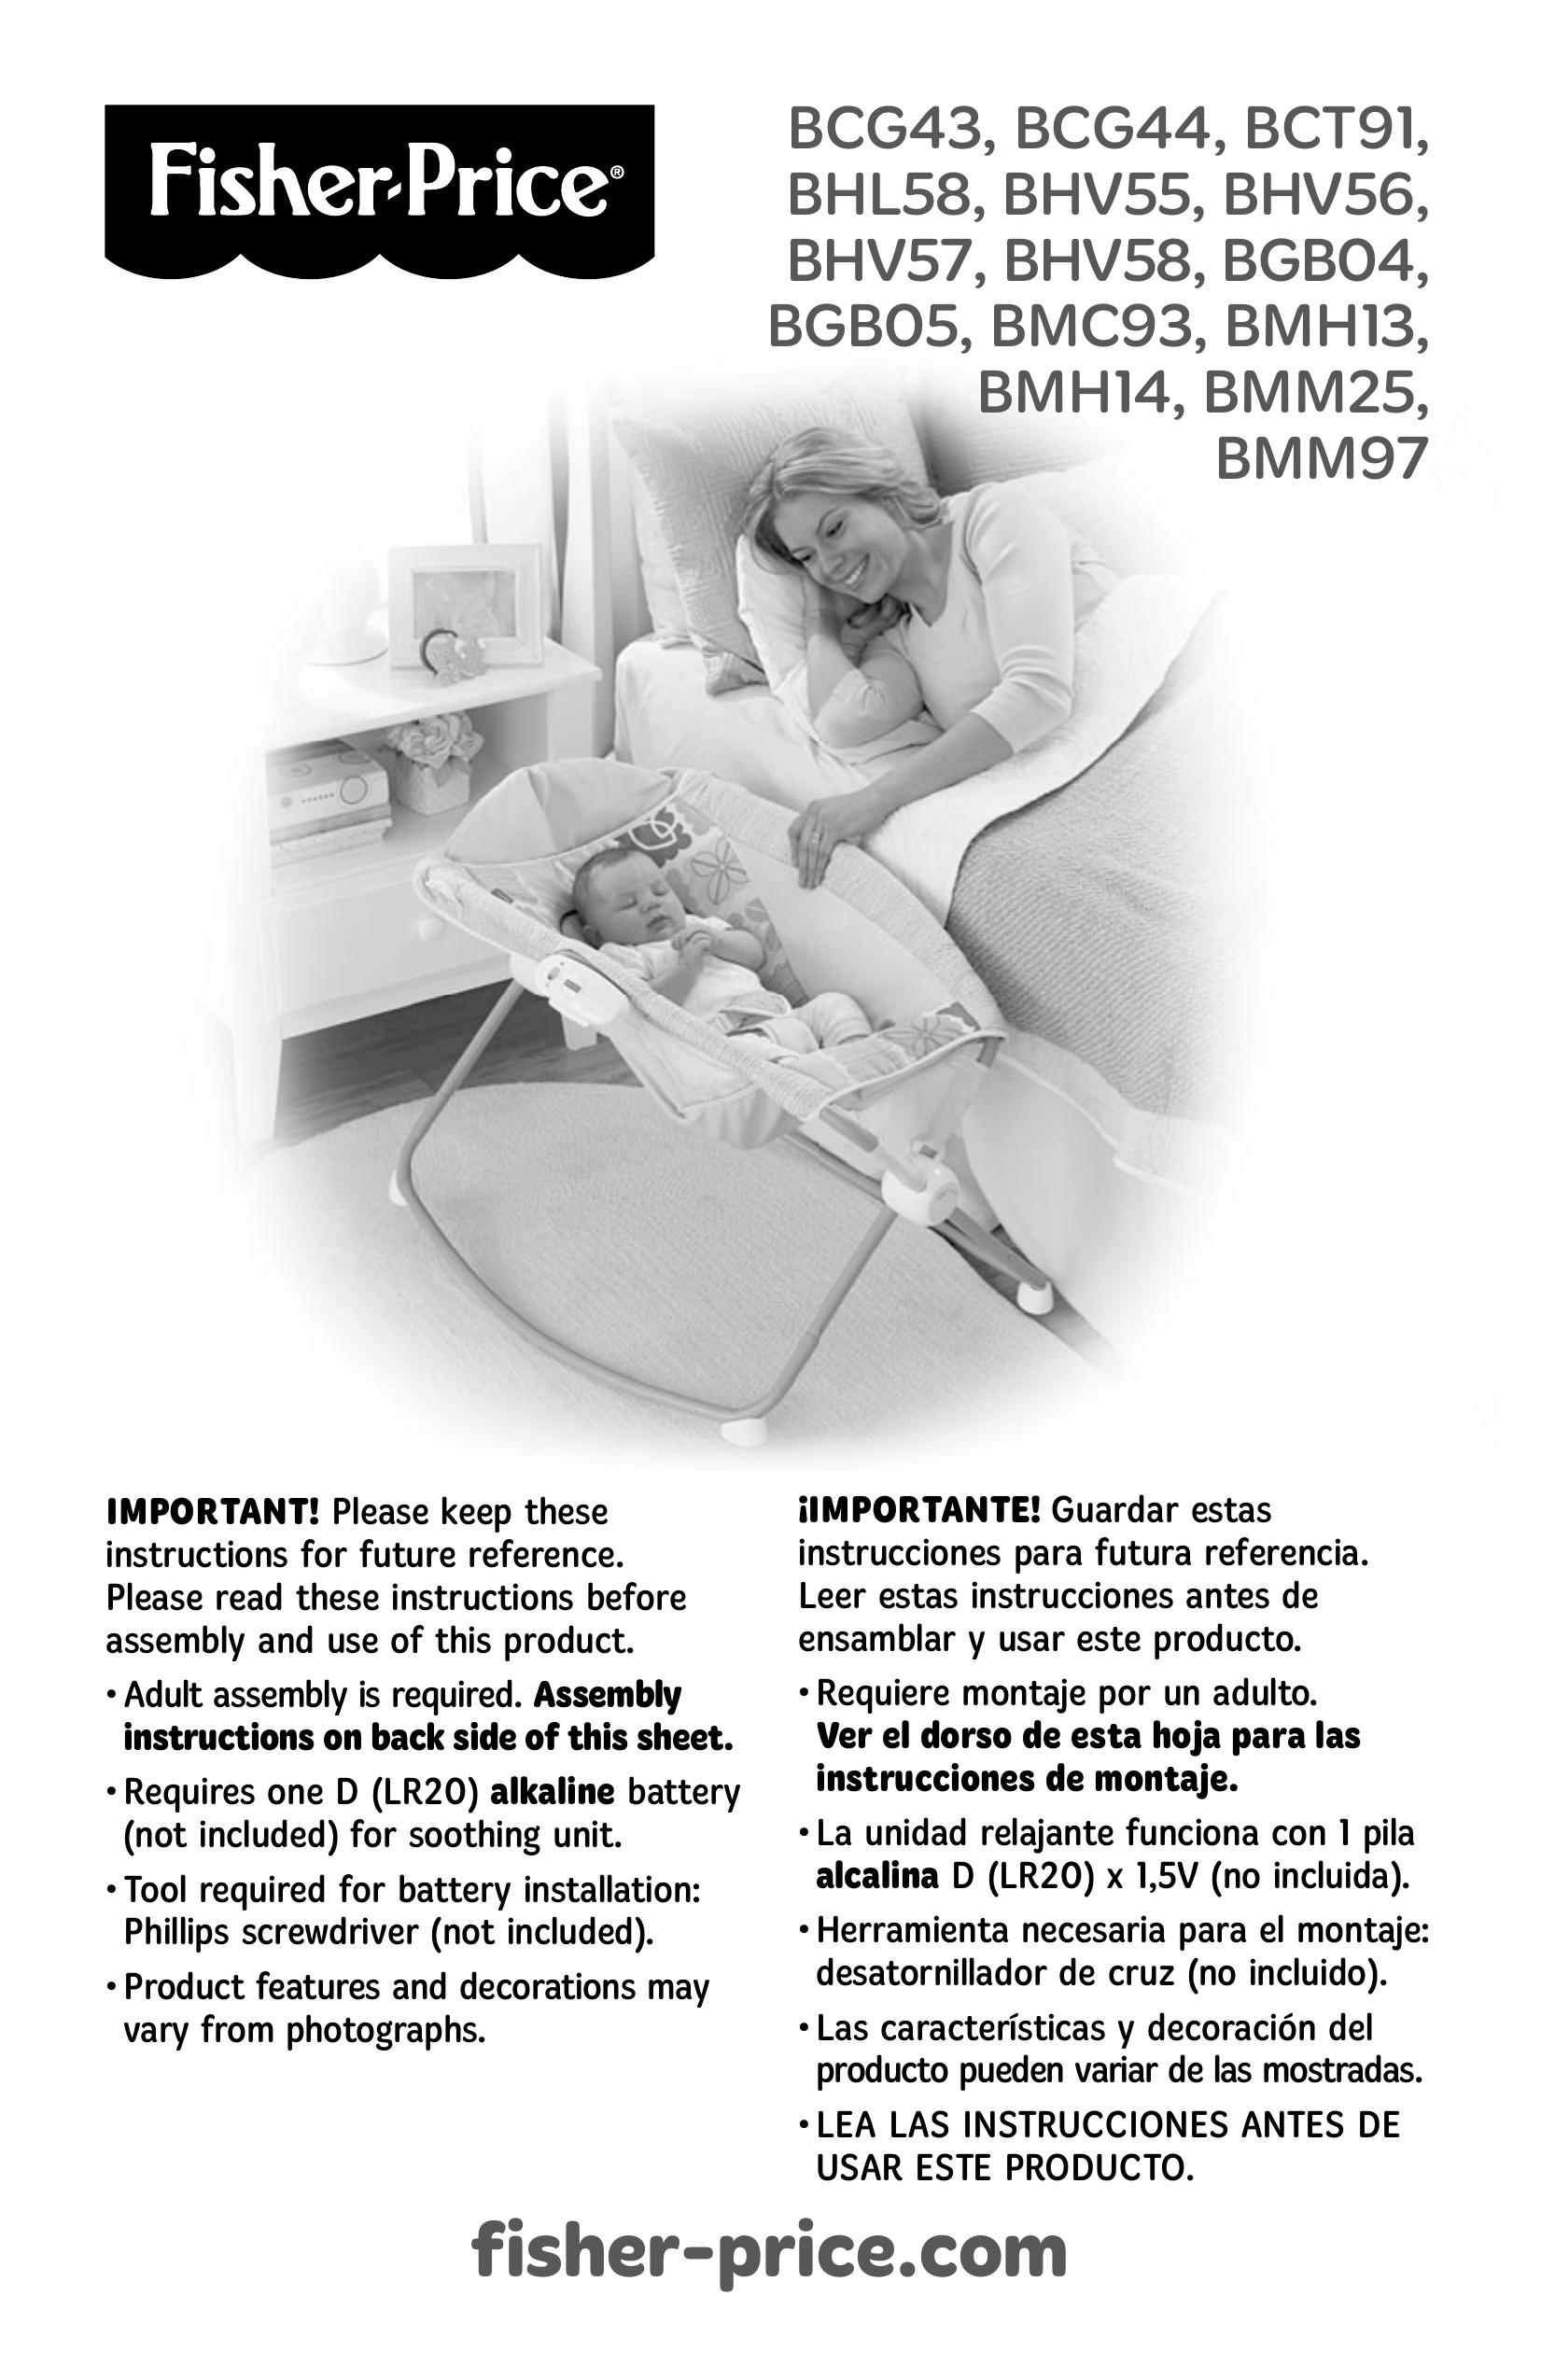 Fisher-Price BHV57 Sleep Apnea Machine User Manual